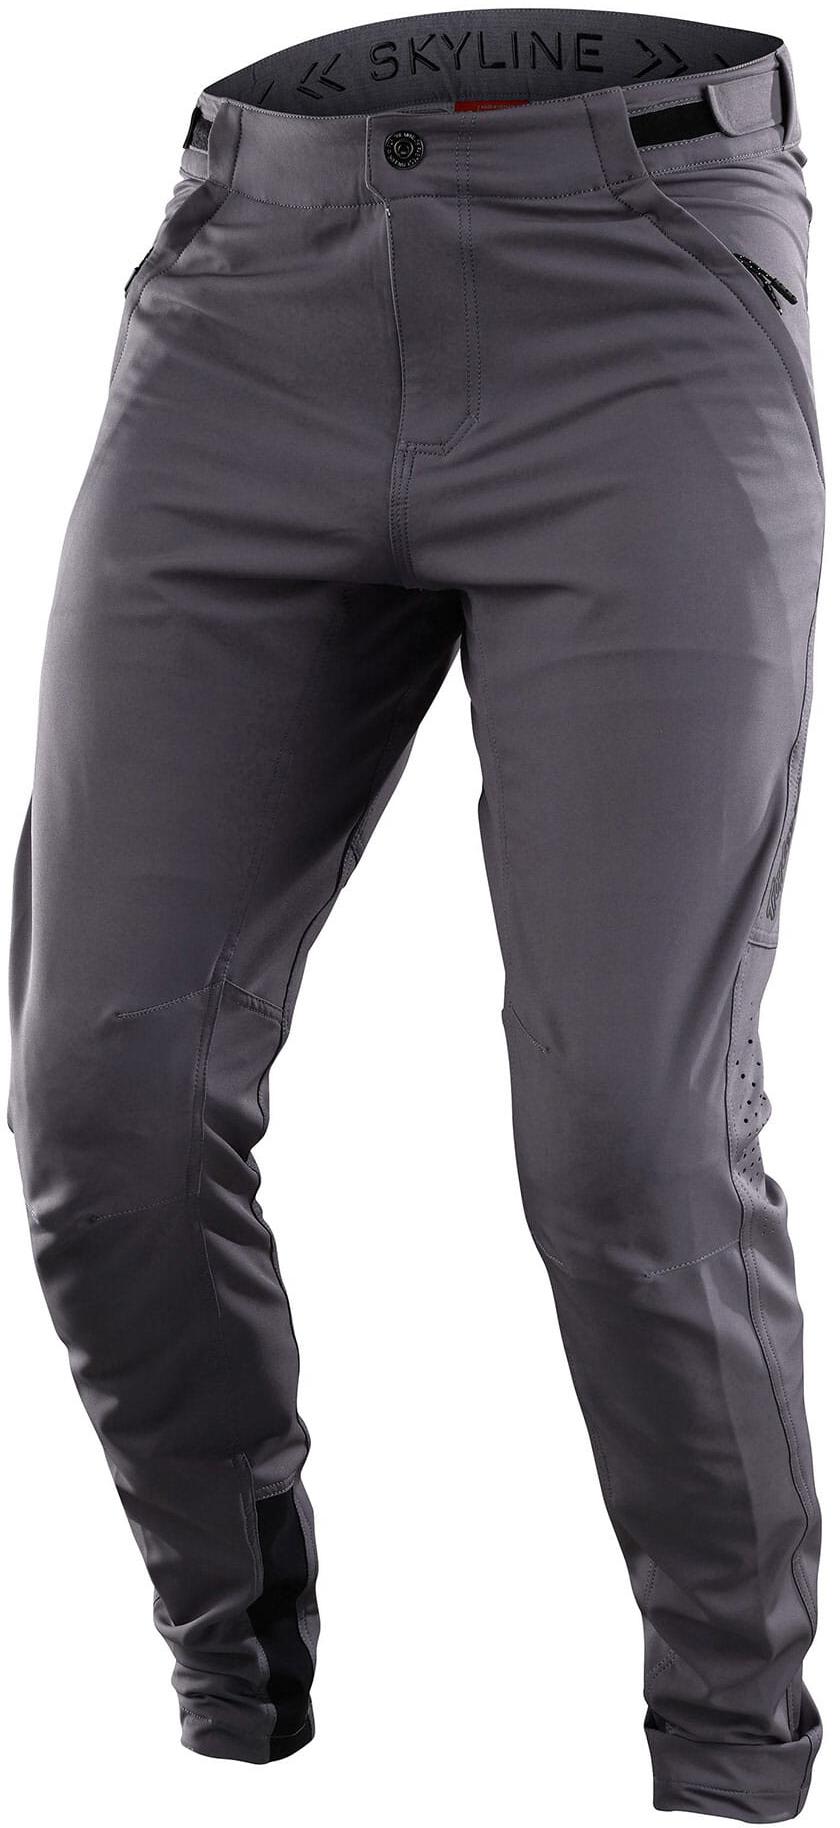 Troy Lee Designs Skyline Mtb Cycling Pants - Mono Grey